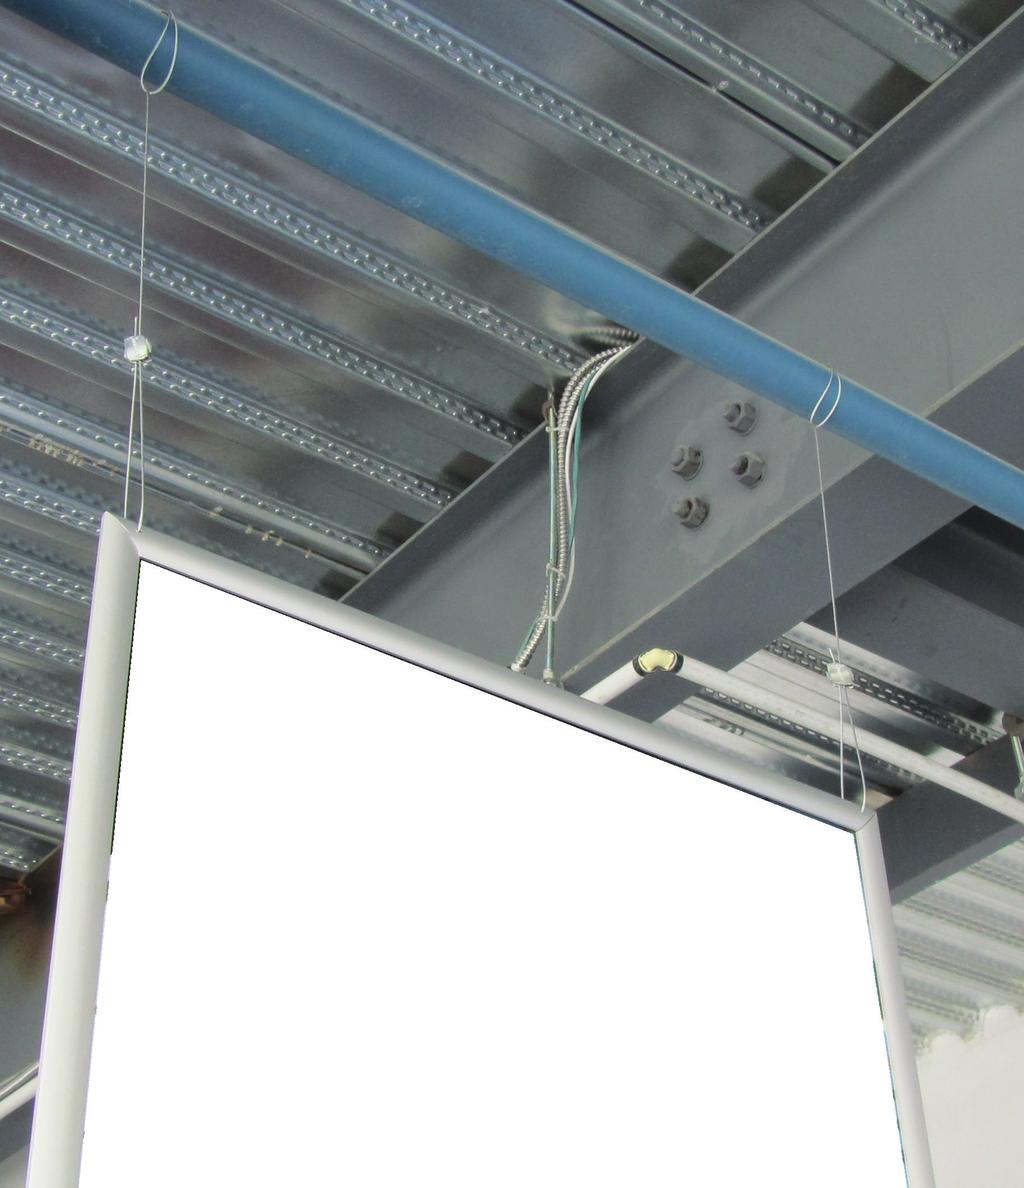 HF RANGE LOOP Loop installation I deal for high ceiling.